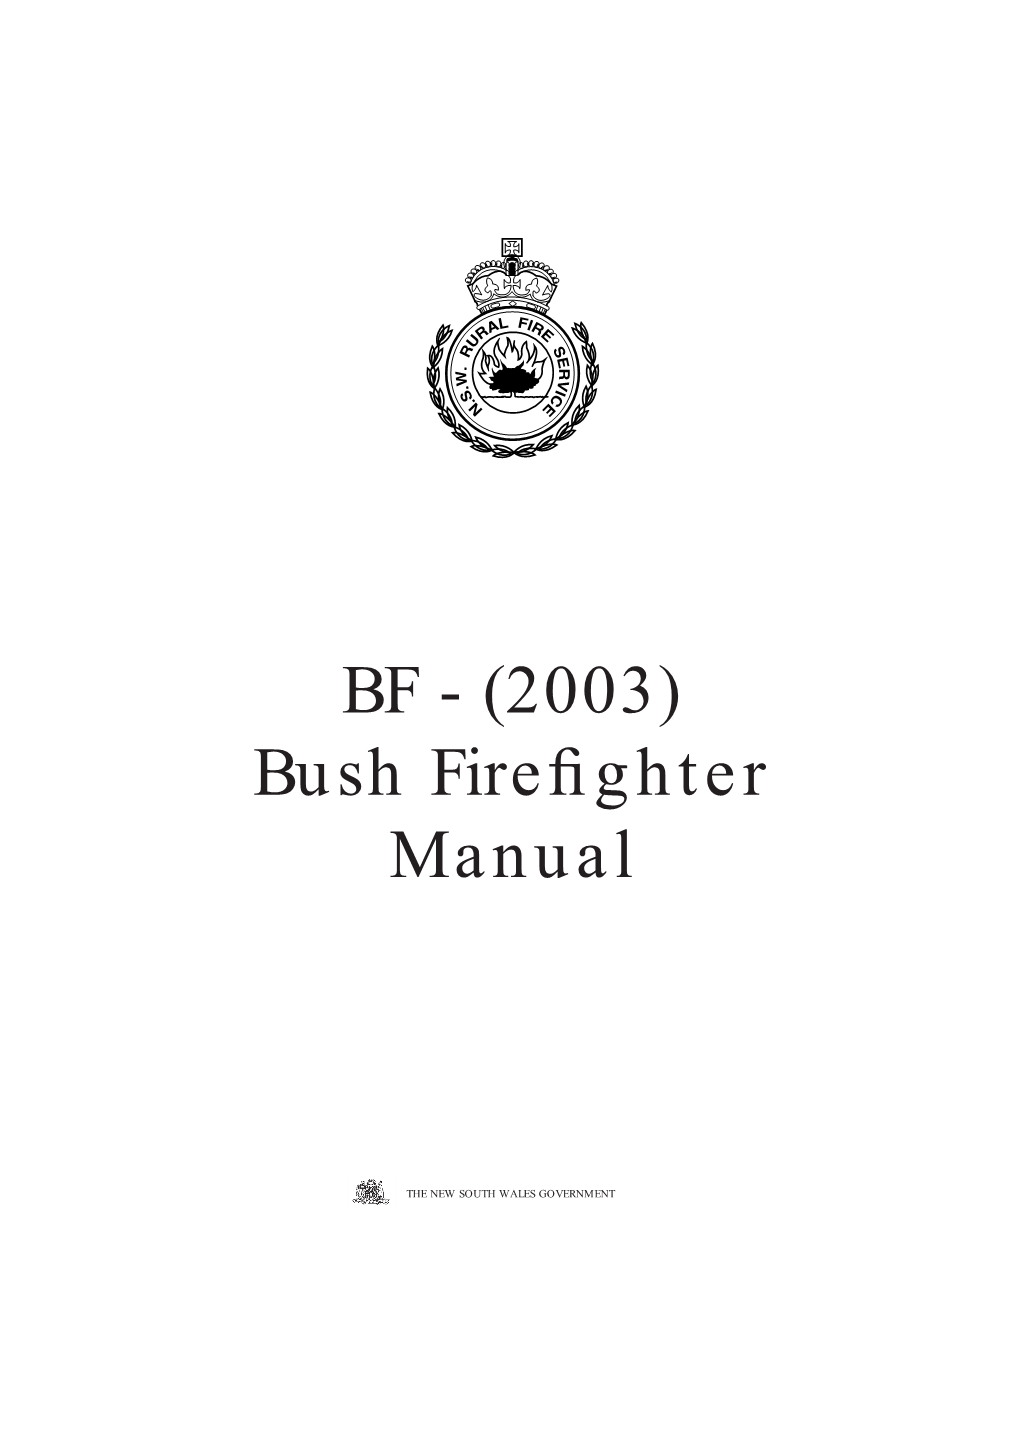 BF - (2003) Bush Fireﬁghter Manual